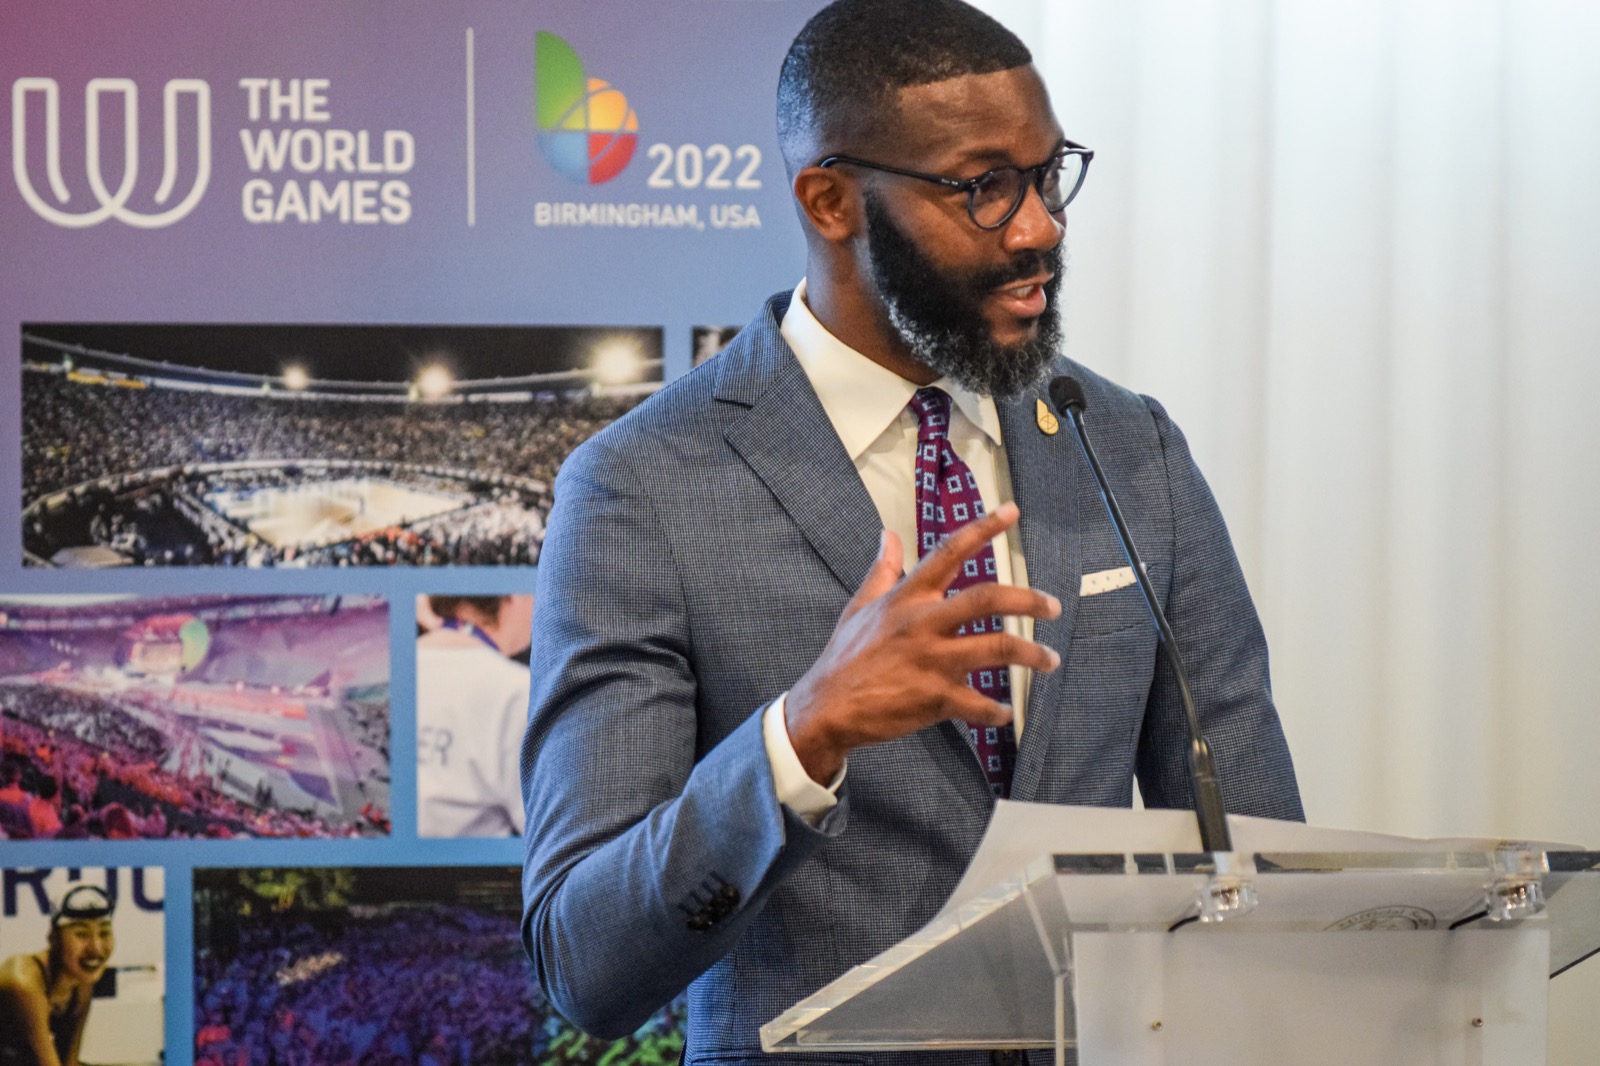 Mayor of Birmingham, Alabama ratifies open doors to Ukrainian athletes in need of traveling to the World Games venue in advance